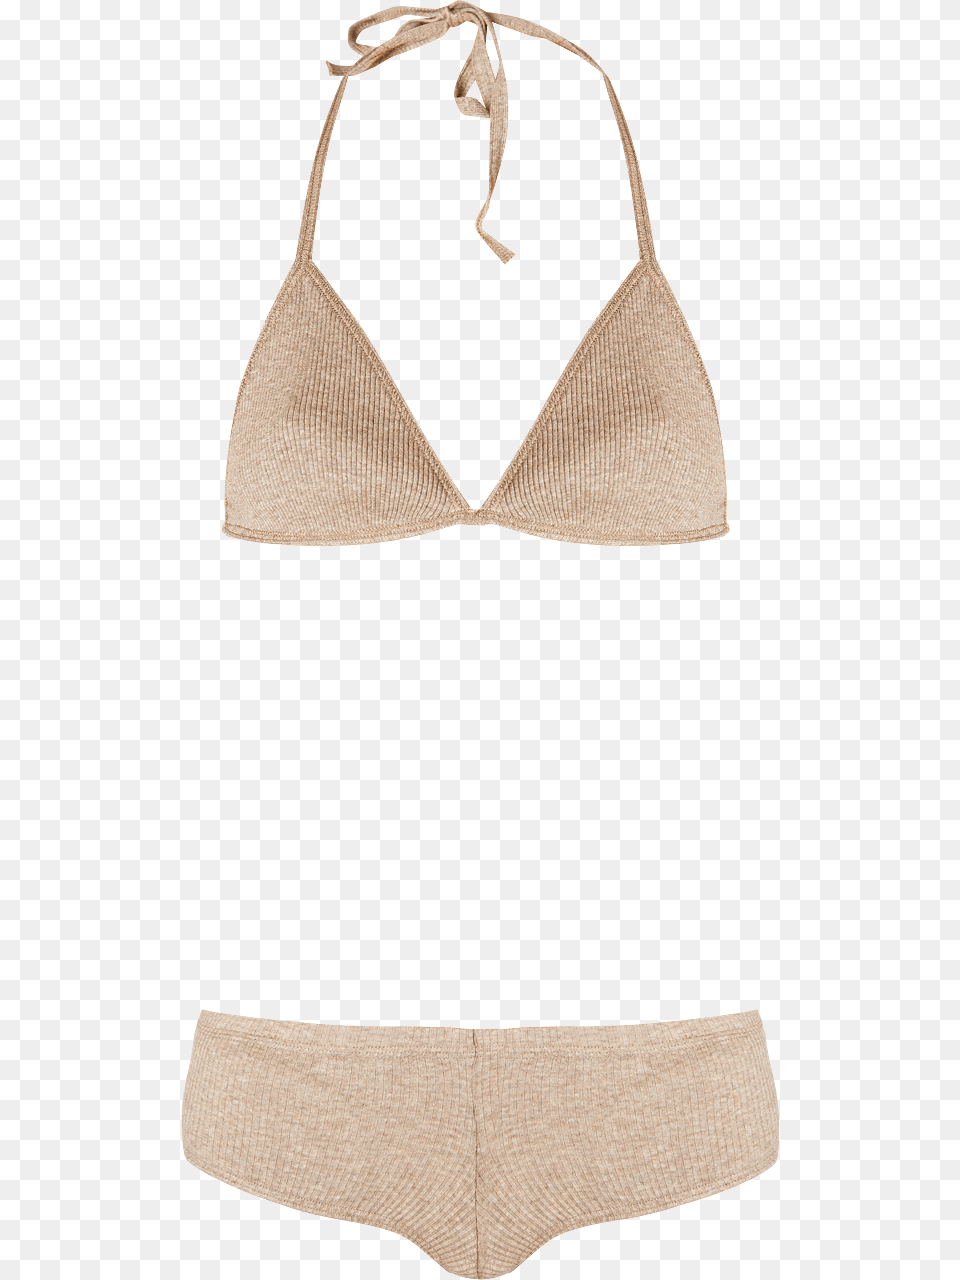 Knit Cashmere Lingerie Set Brassiere, Bikini, Clothing, Swimwear Png Image